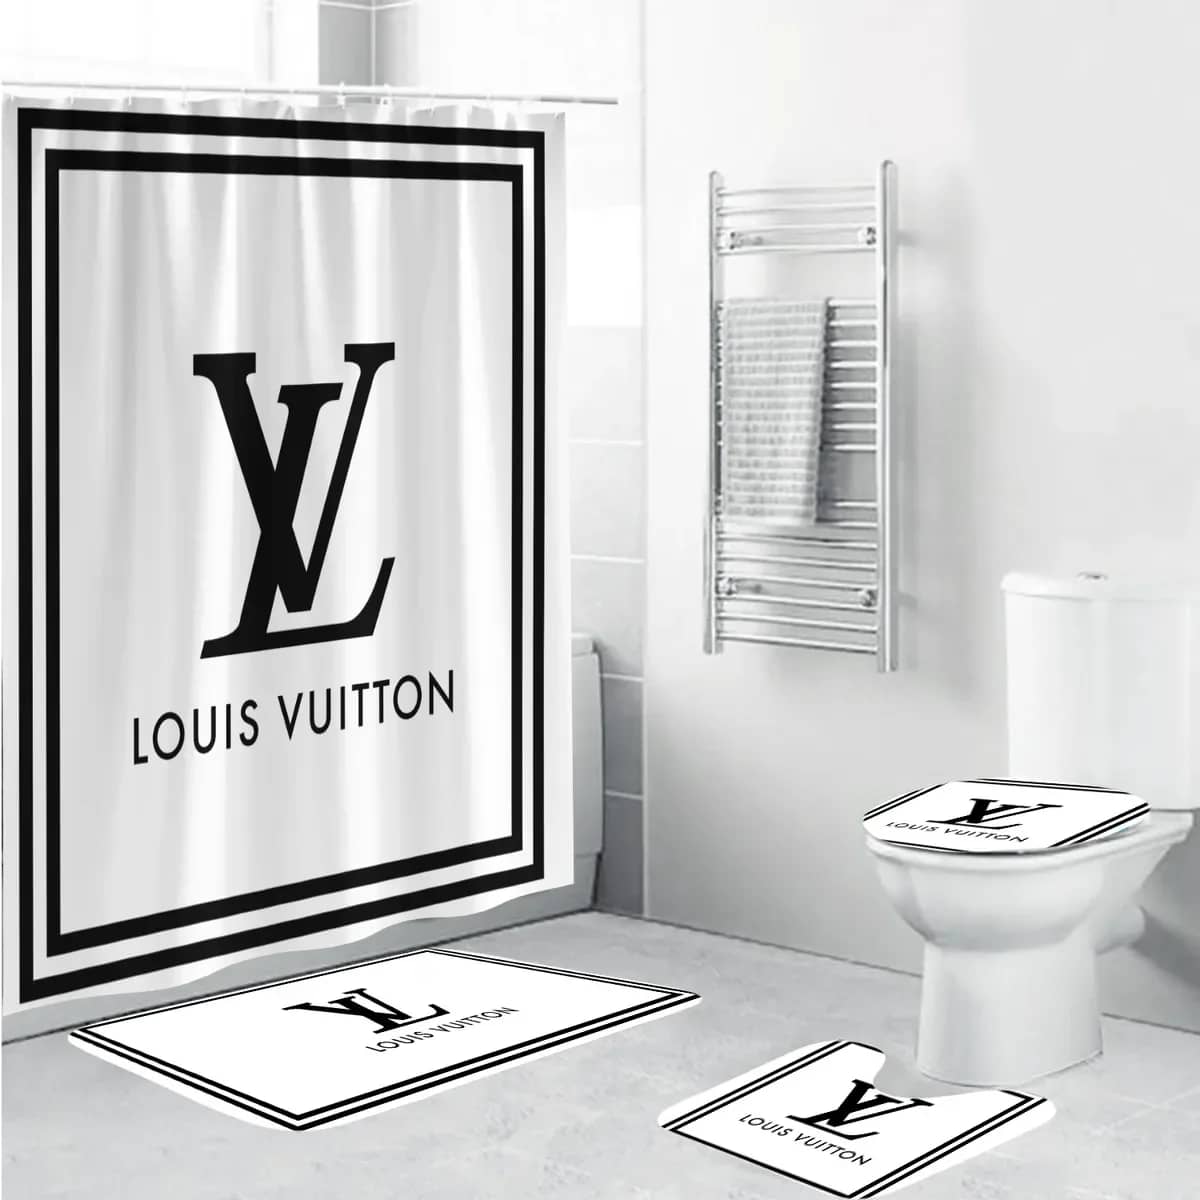 Louis Vuitton White Luxury Brand Premium Bathroom Sets